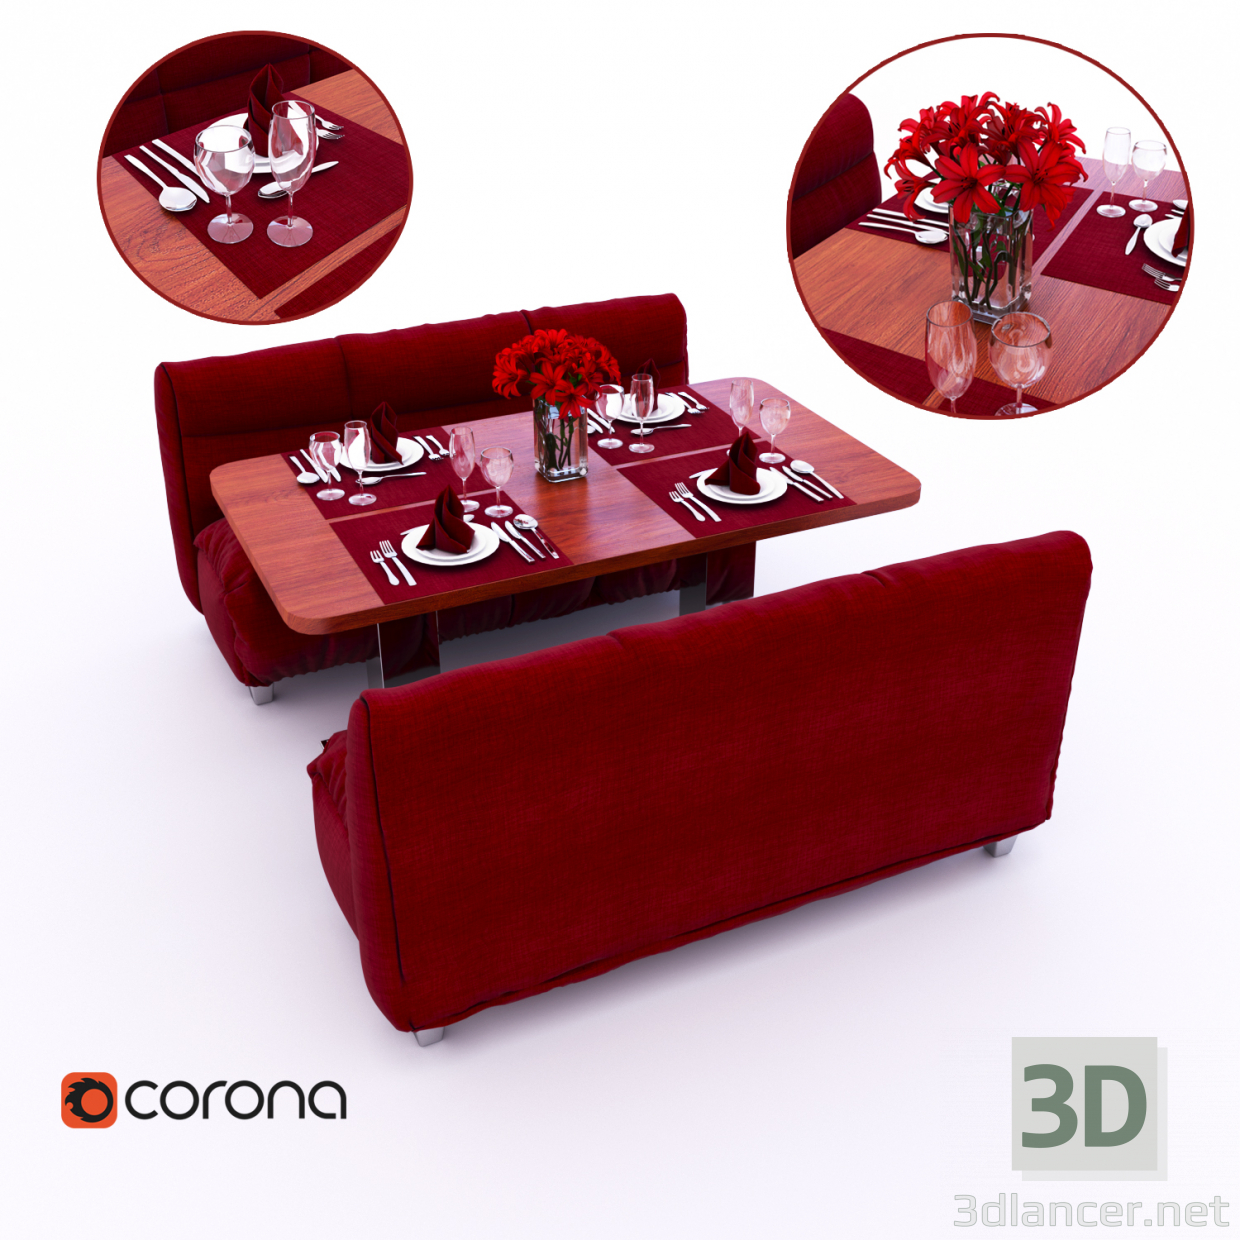 Cafe stol servirovka 3D modelo Compro - render